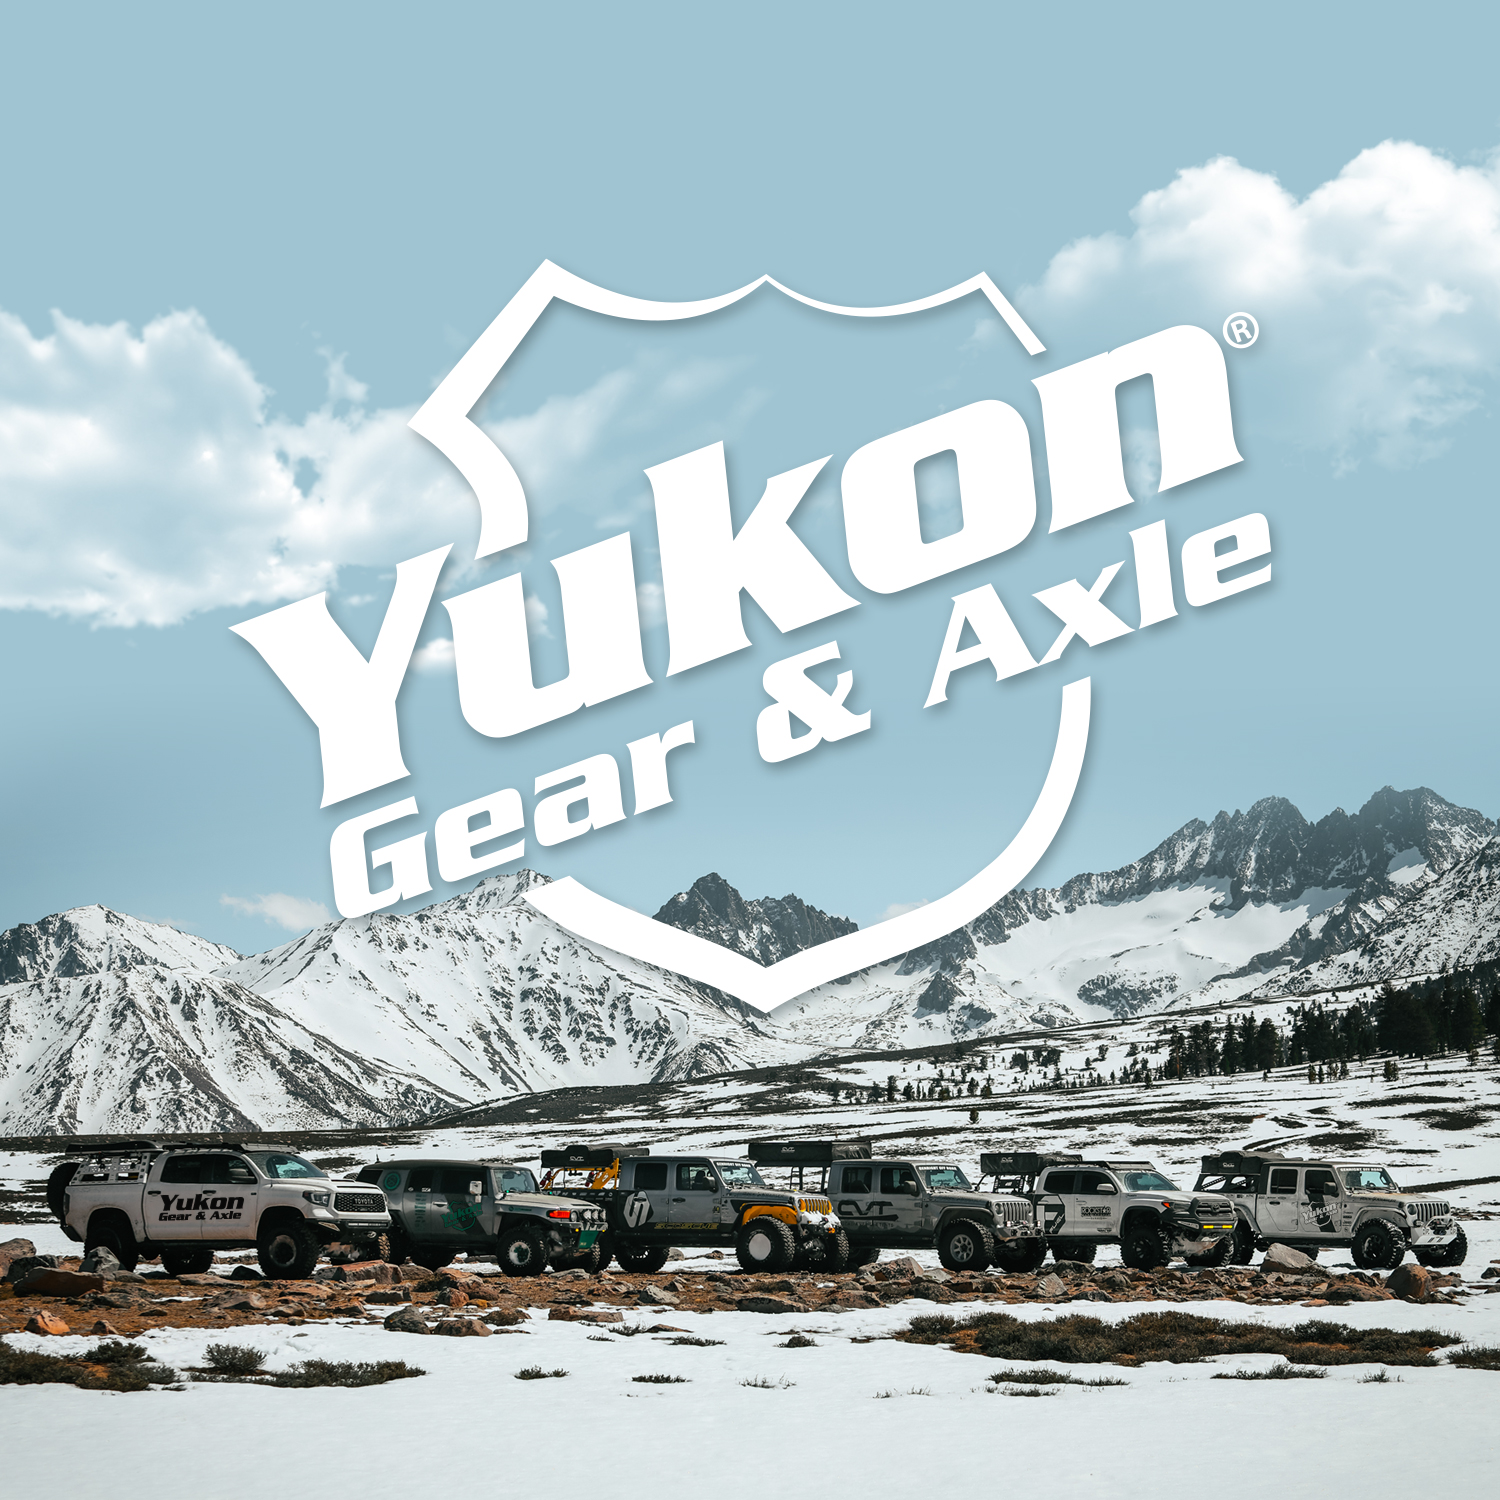 Yukon replacement standard open spider gear kit for Dana 80 with 37 spline axles